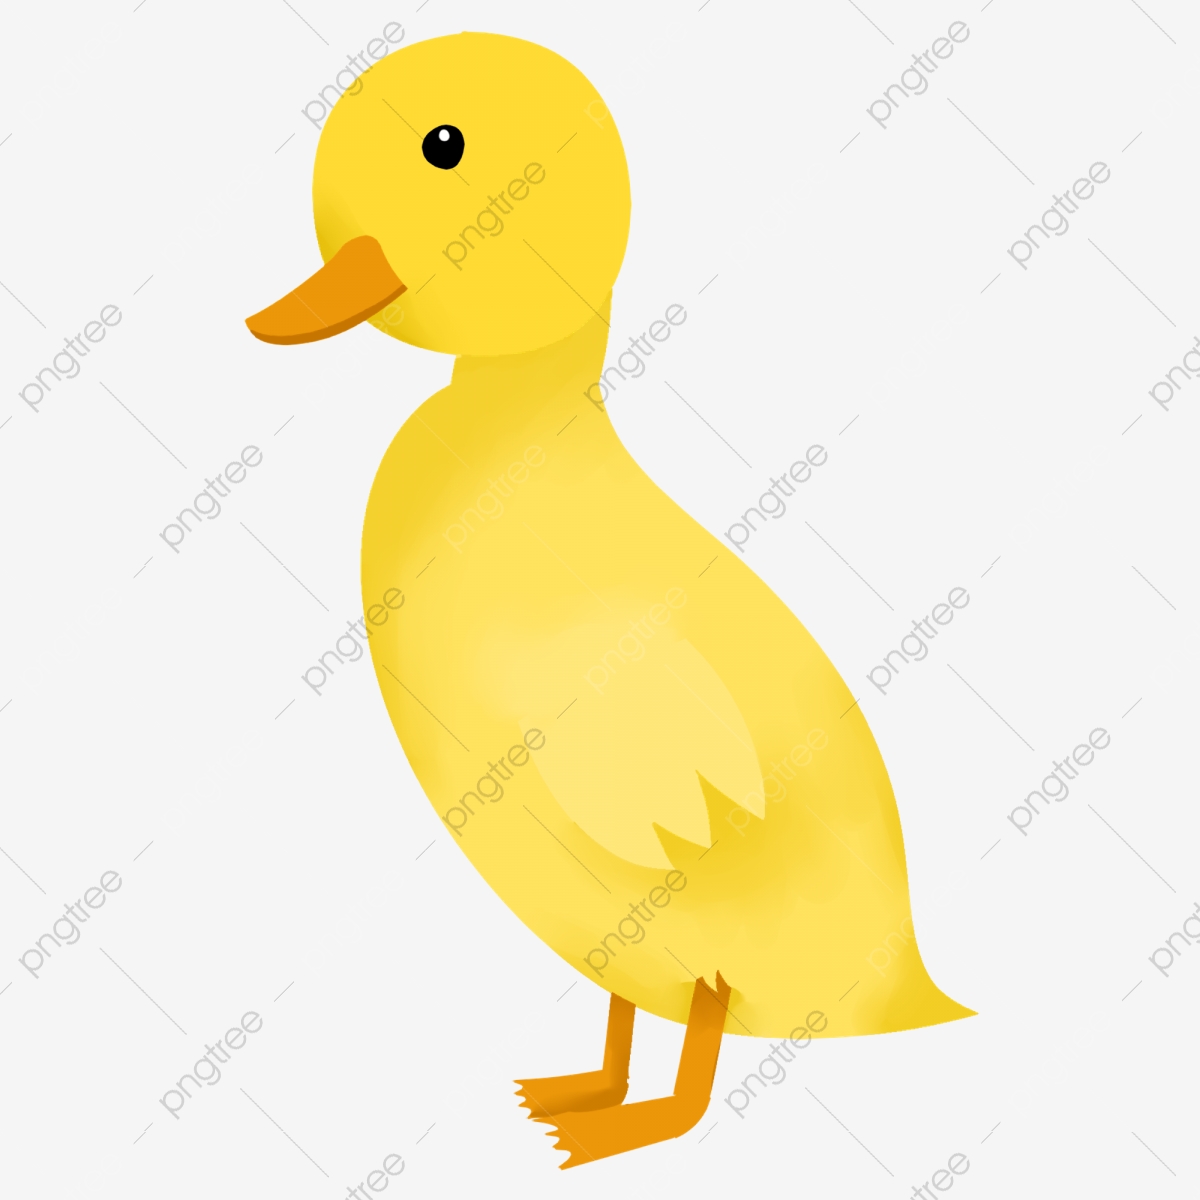 Duckling clipart beautiful. Yellow hand drawn cute